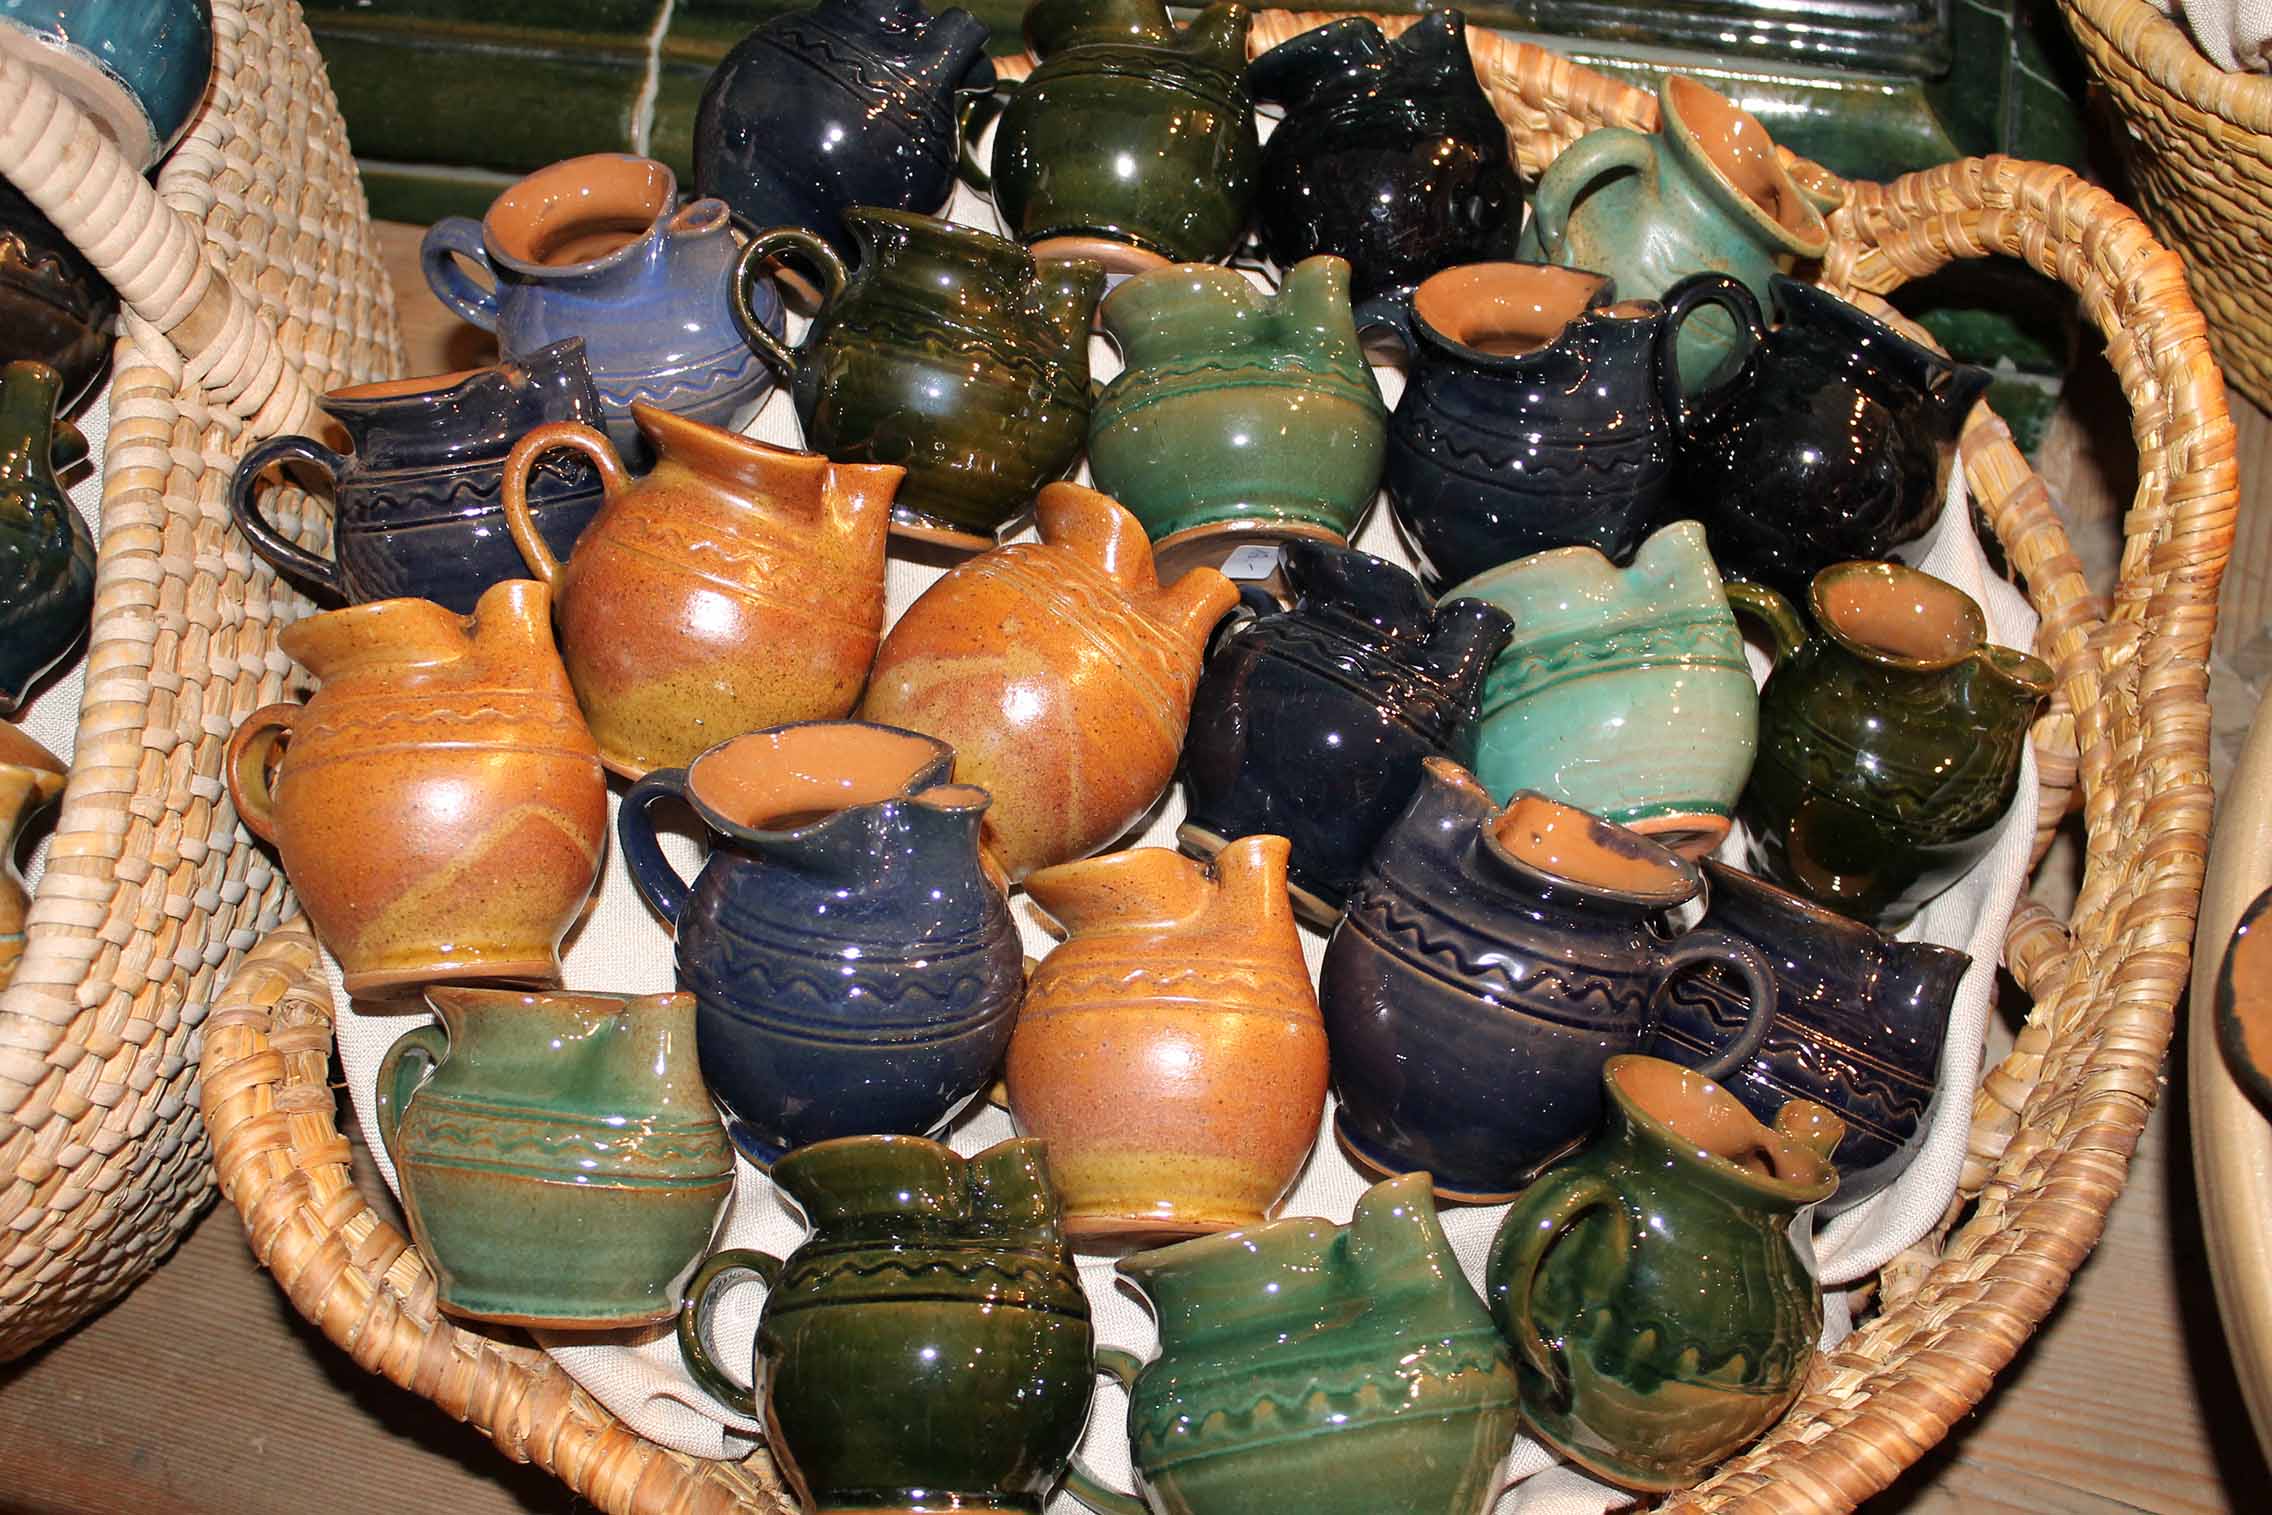 Bad Gamser Keramik, Löcker, Löcker-Welek, handgemachte keramik, Teller, gedrehte Teller, Handwerkskunst